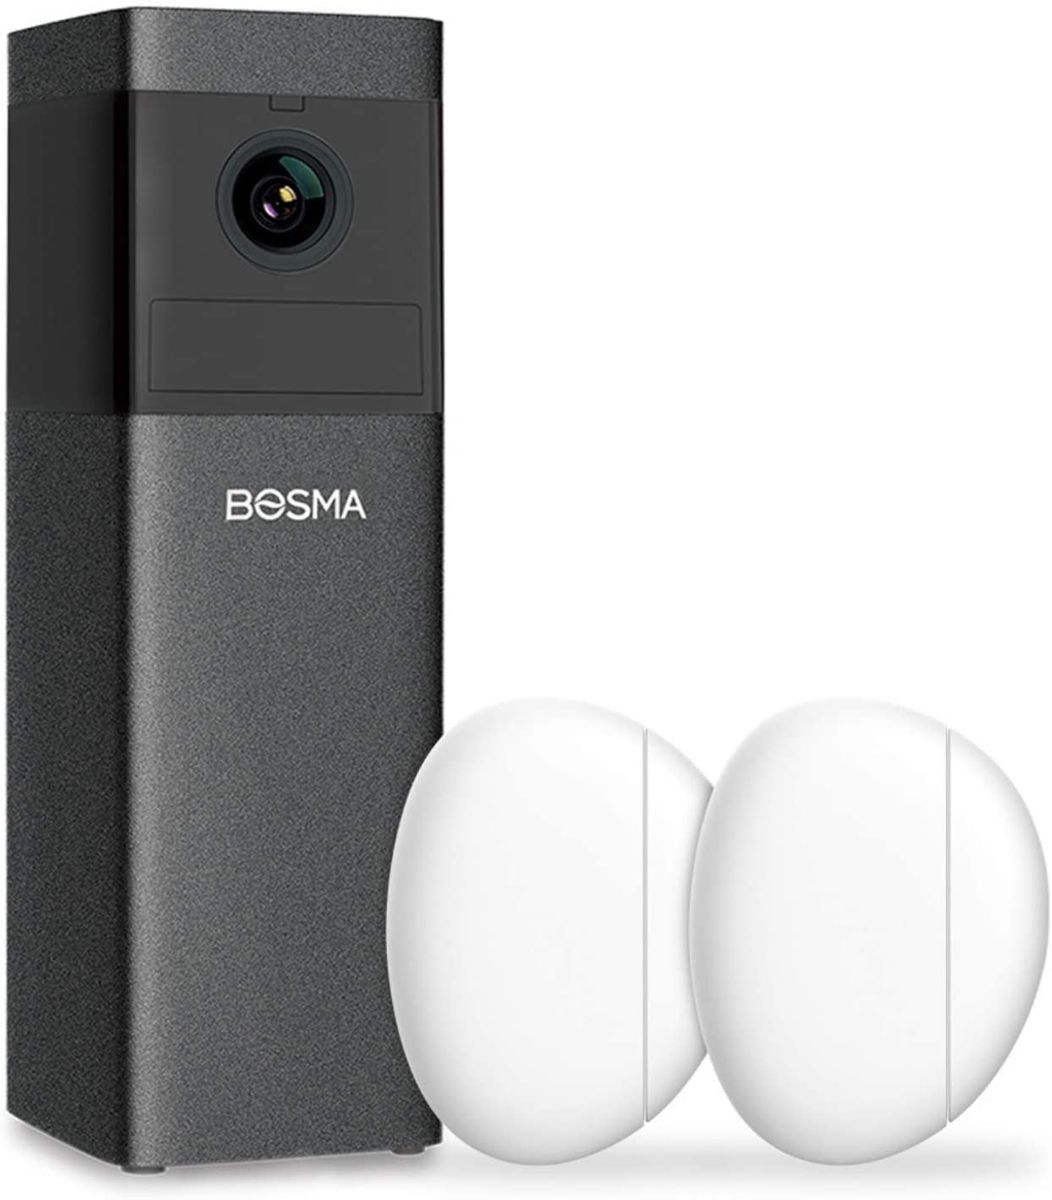 BOSMA X1 Home Security Camera 1080p HD Surveillance Camera with Two-Way Call Colour Night Vision Siren Alarm Remote Surveillance PIR Motion Sound Alerts